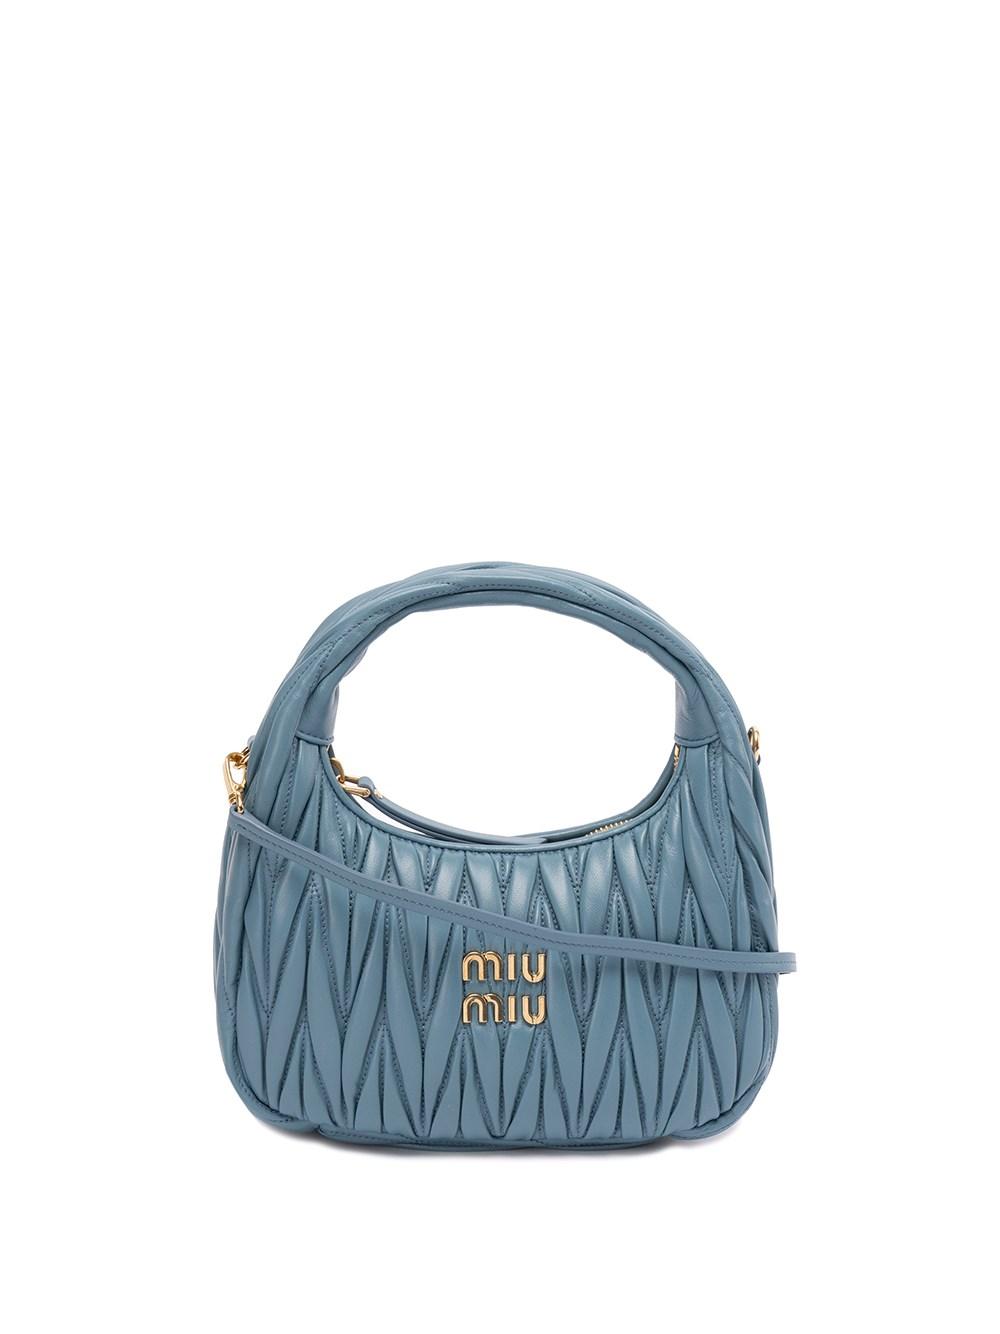 Miu Miu `miu Wander` Matelassé Leather Mini Hobo Bag in Blue | Lyst